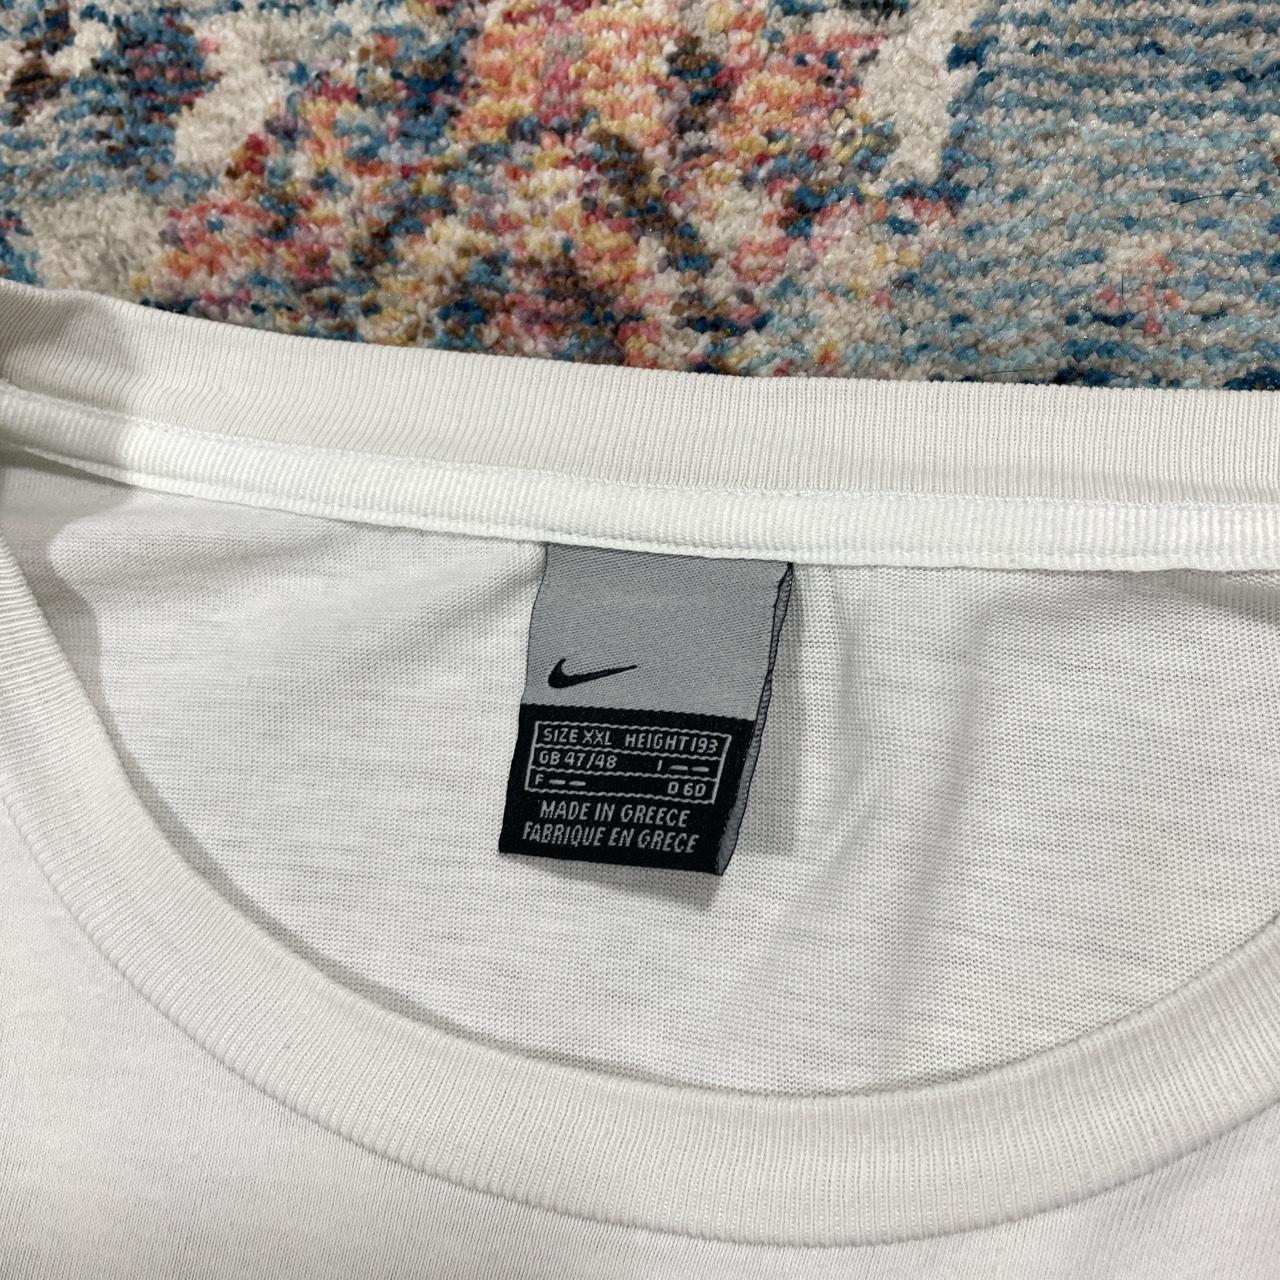 Vintage Nike White T-Shirt